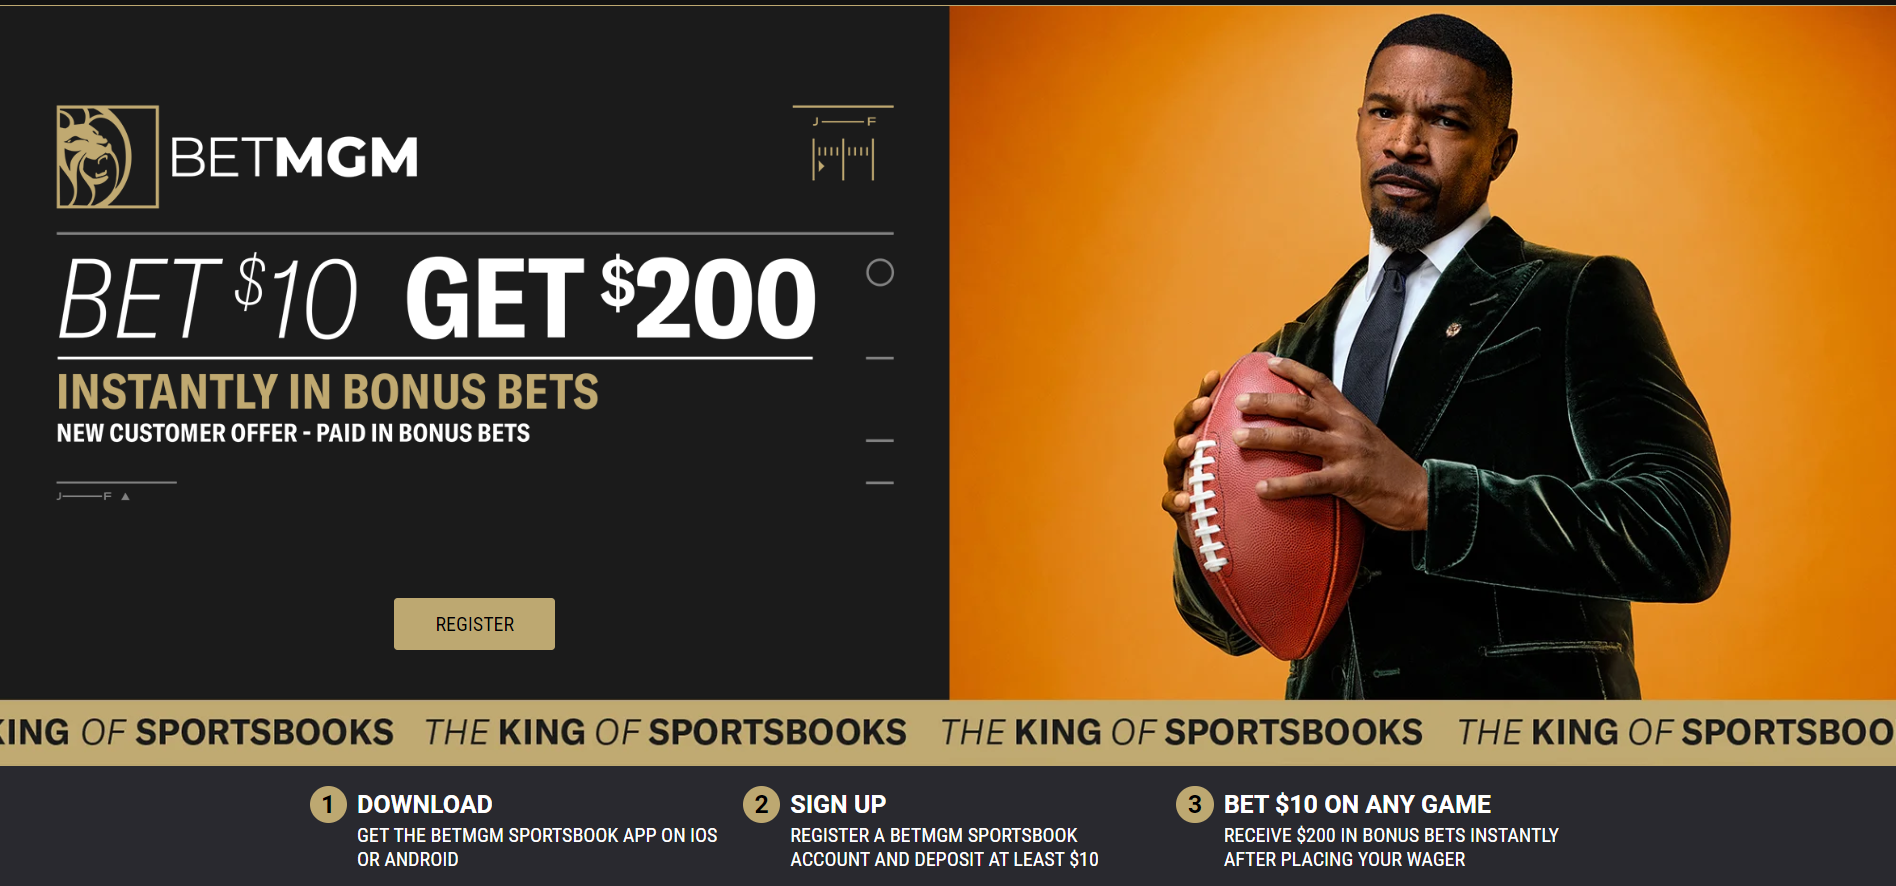 BetMGM Sportsbook Bet $10, Get $200 Bonus Bets